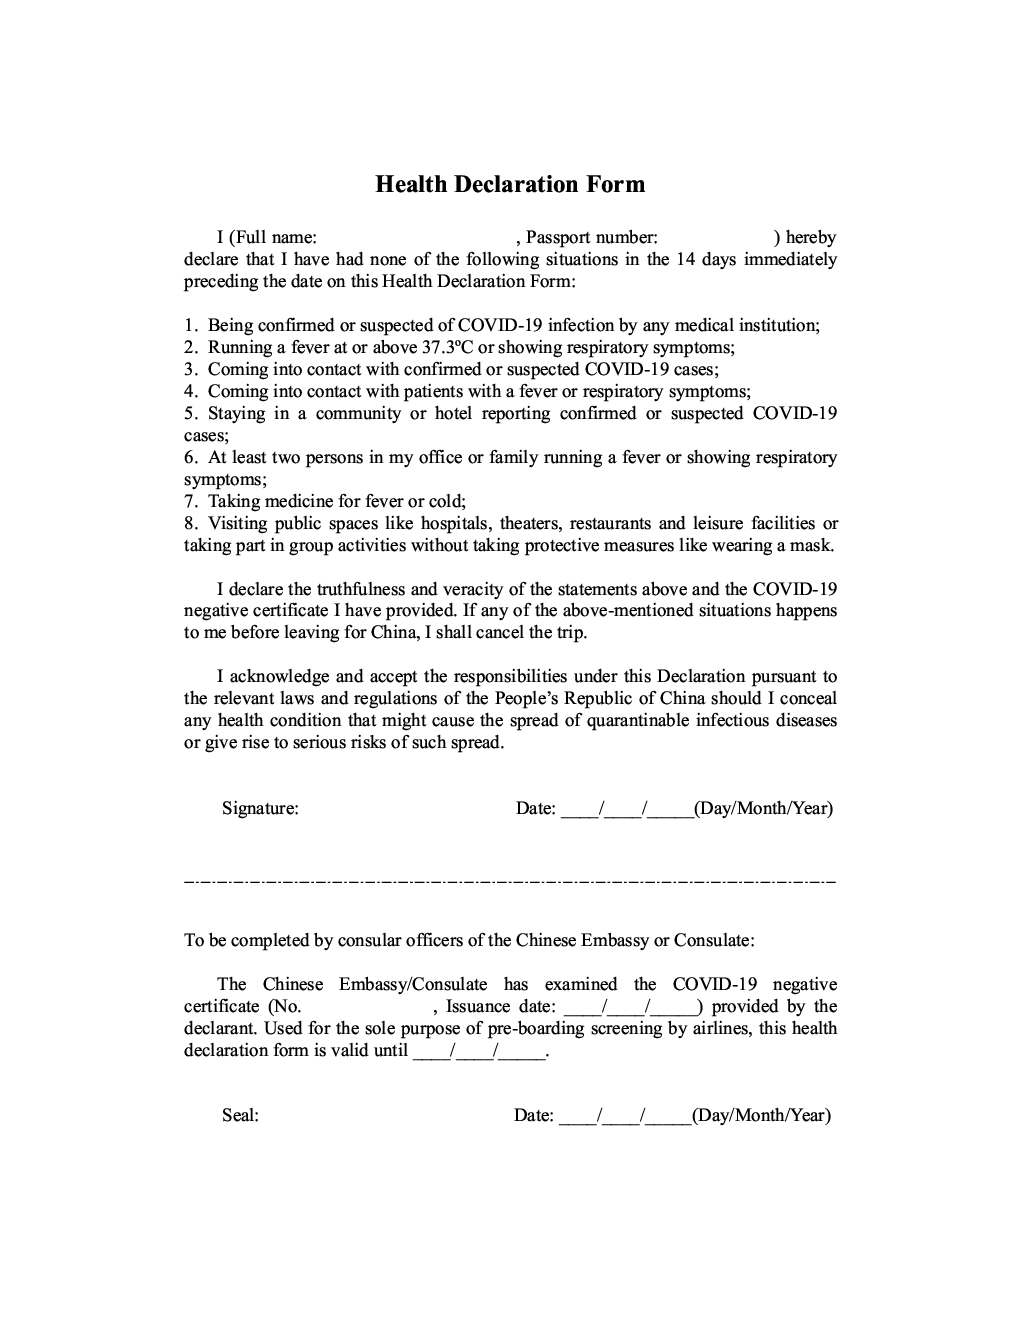 health and travel record declaration china